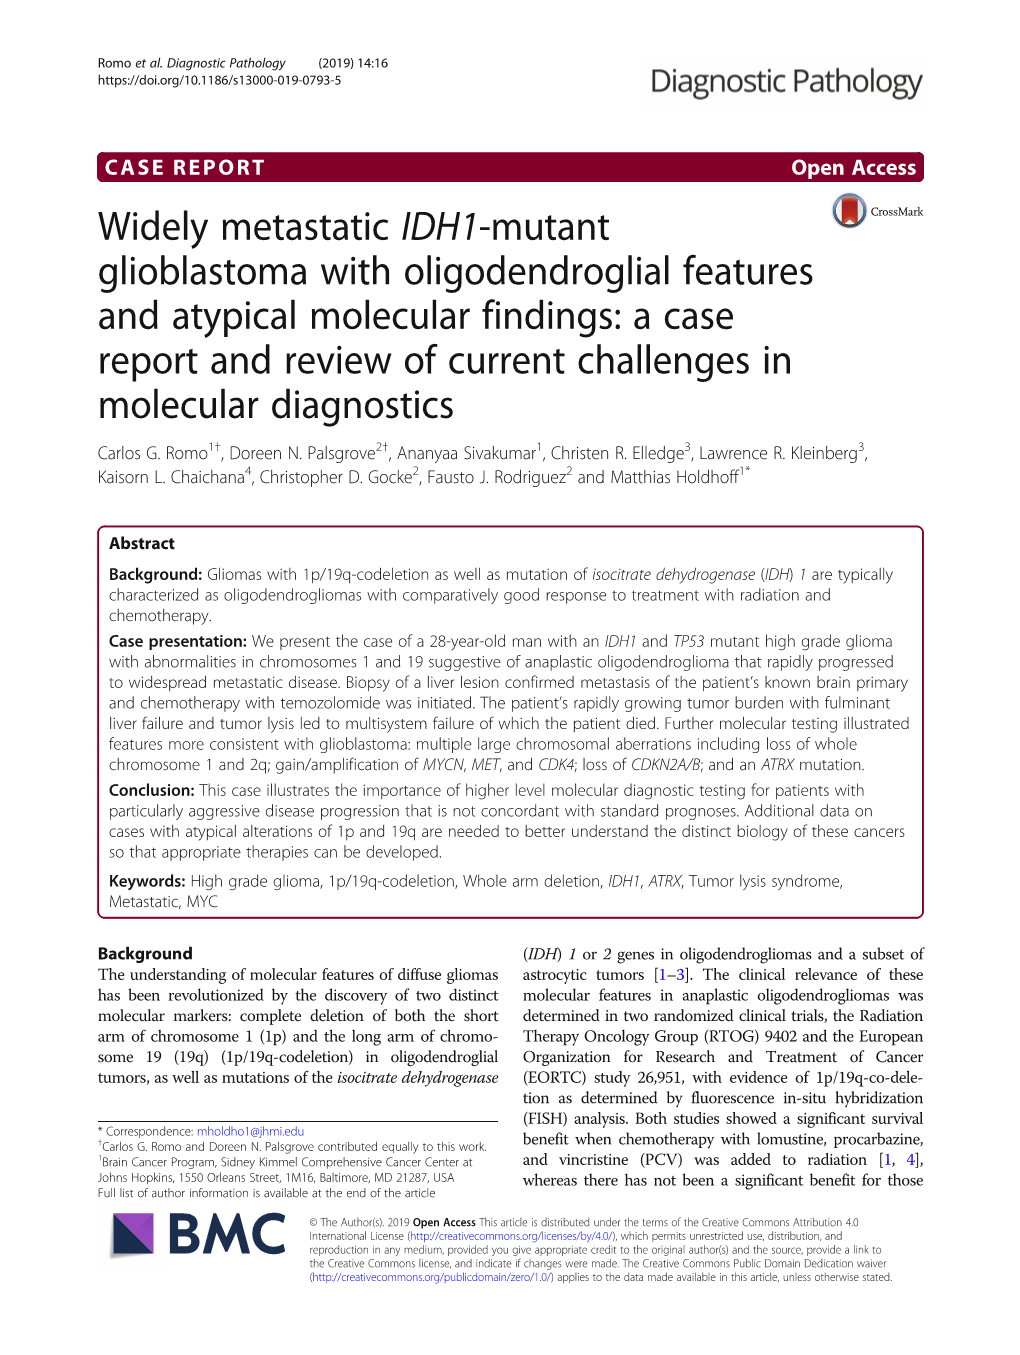 Widely Metastatic IDH1-Mutant Glioblastoma with Oligodendroglial